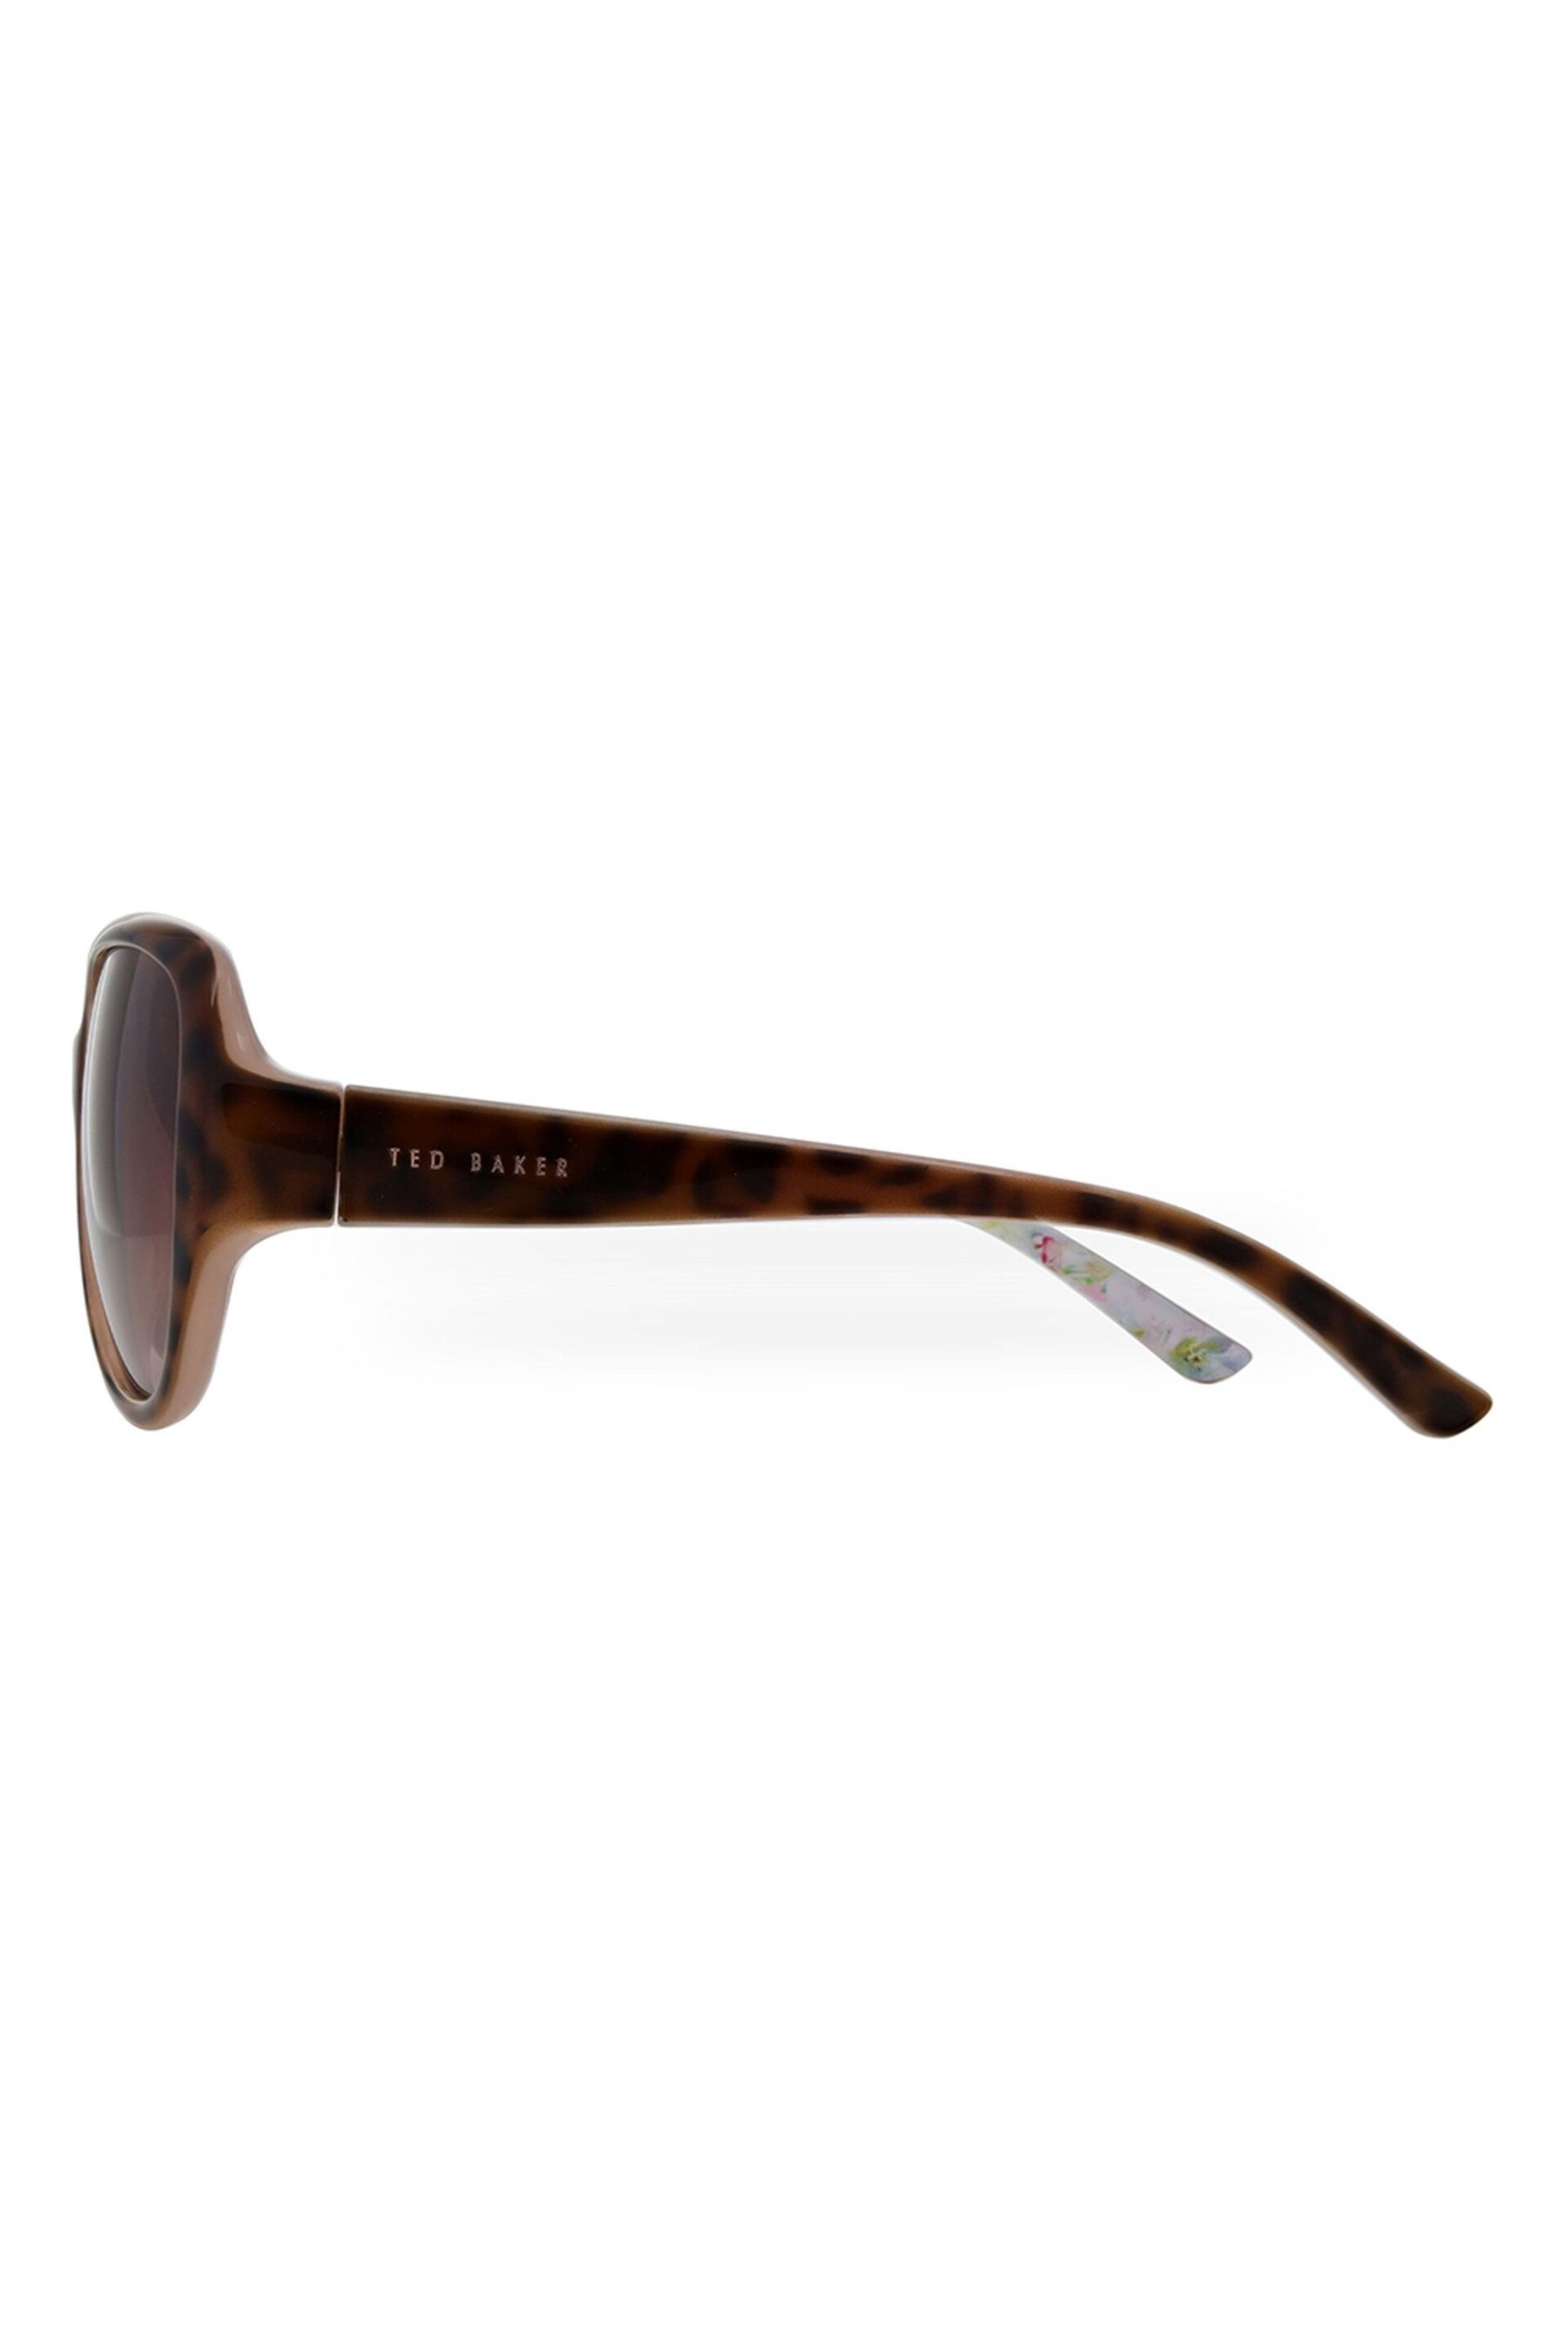 Ted Baker Tortoiseshell Brown/Pink Oversized Graduated Fashion Frame Sunglasses - Image 3 of 4